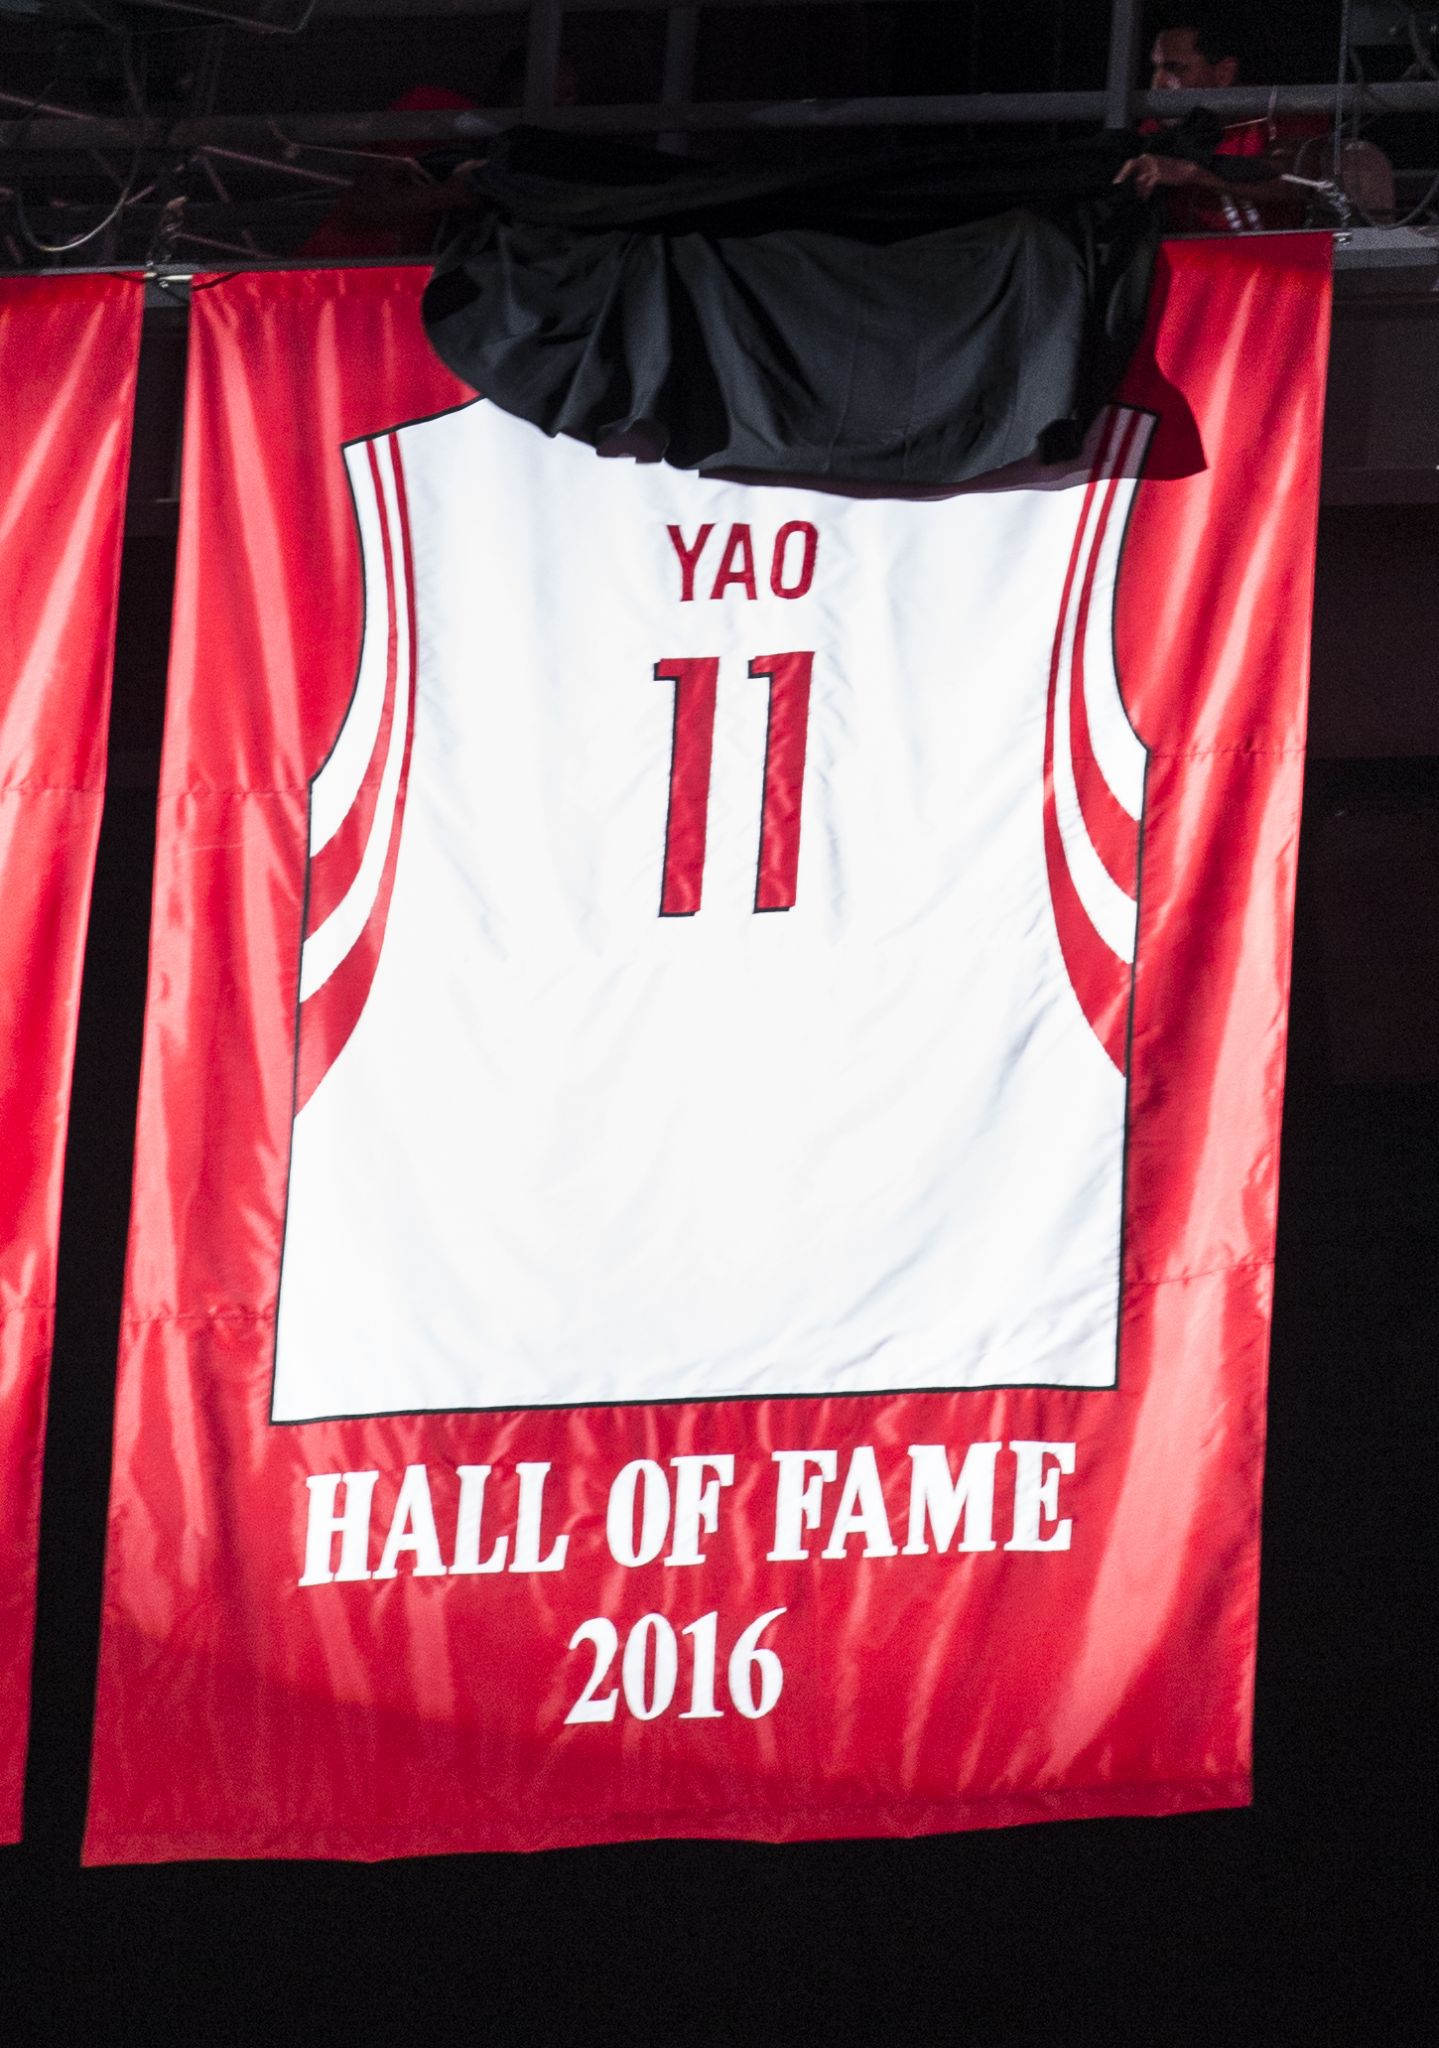 yao ming retired jersey